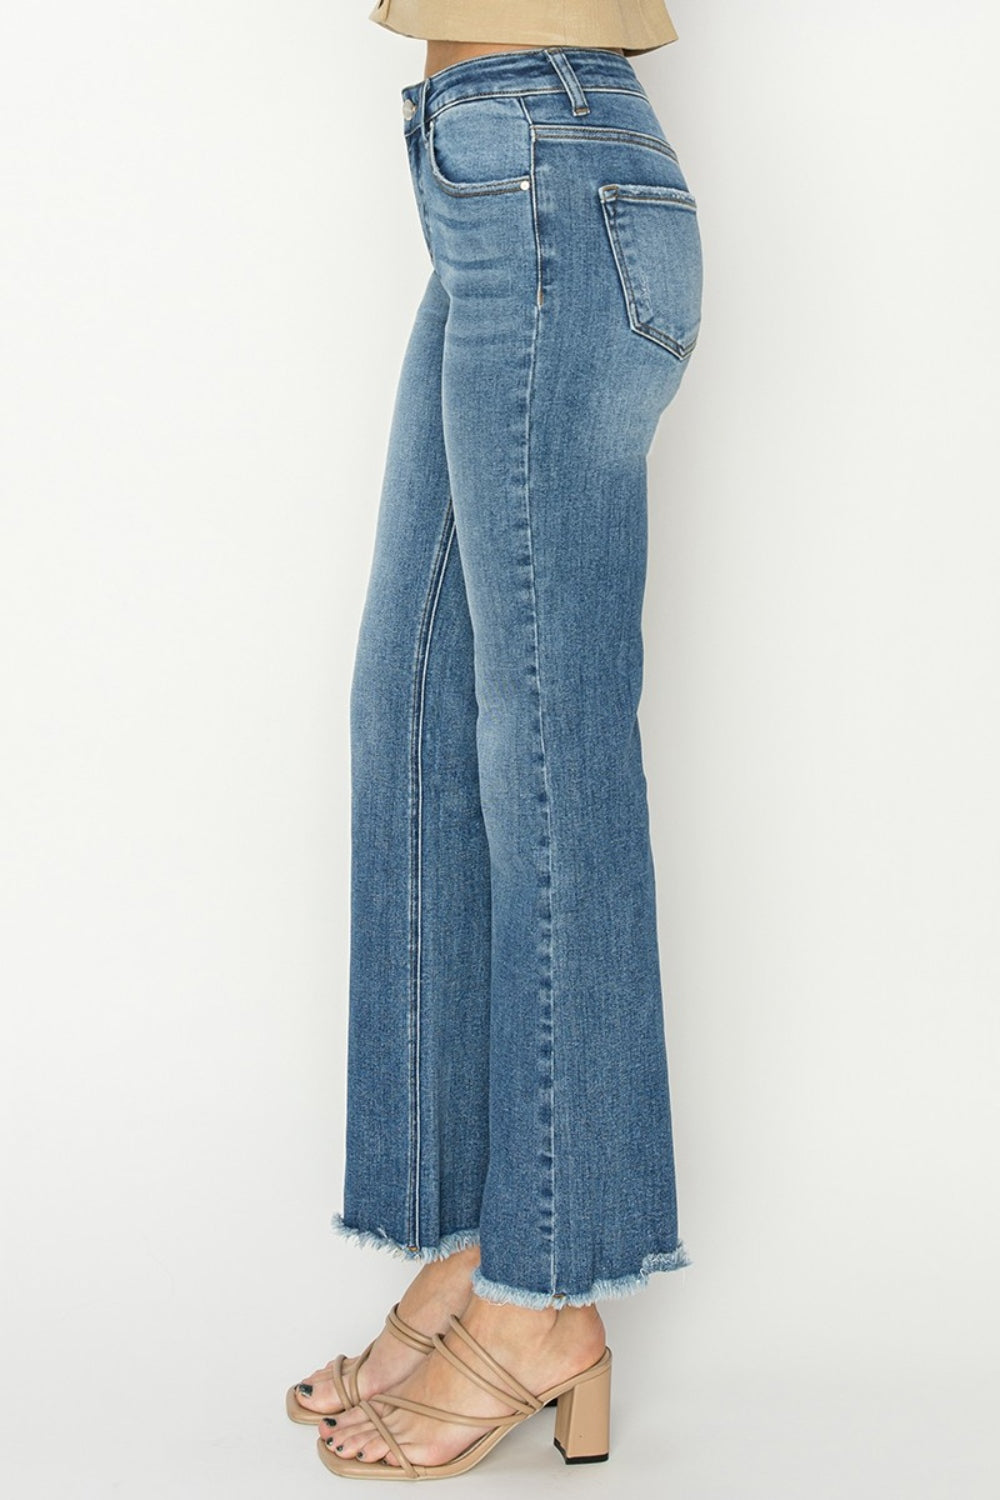 Dim Gray RISEN Mid-Rise Frayed Hem Bootcut Jeans Sentient Beauty Fashions Apaparel & Accessories